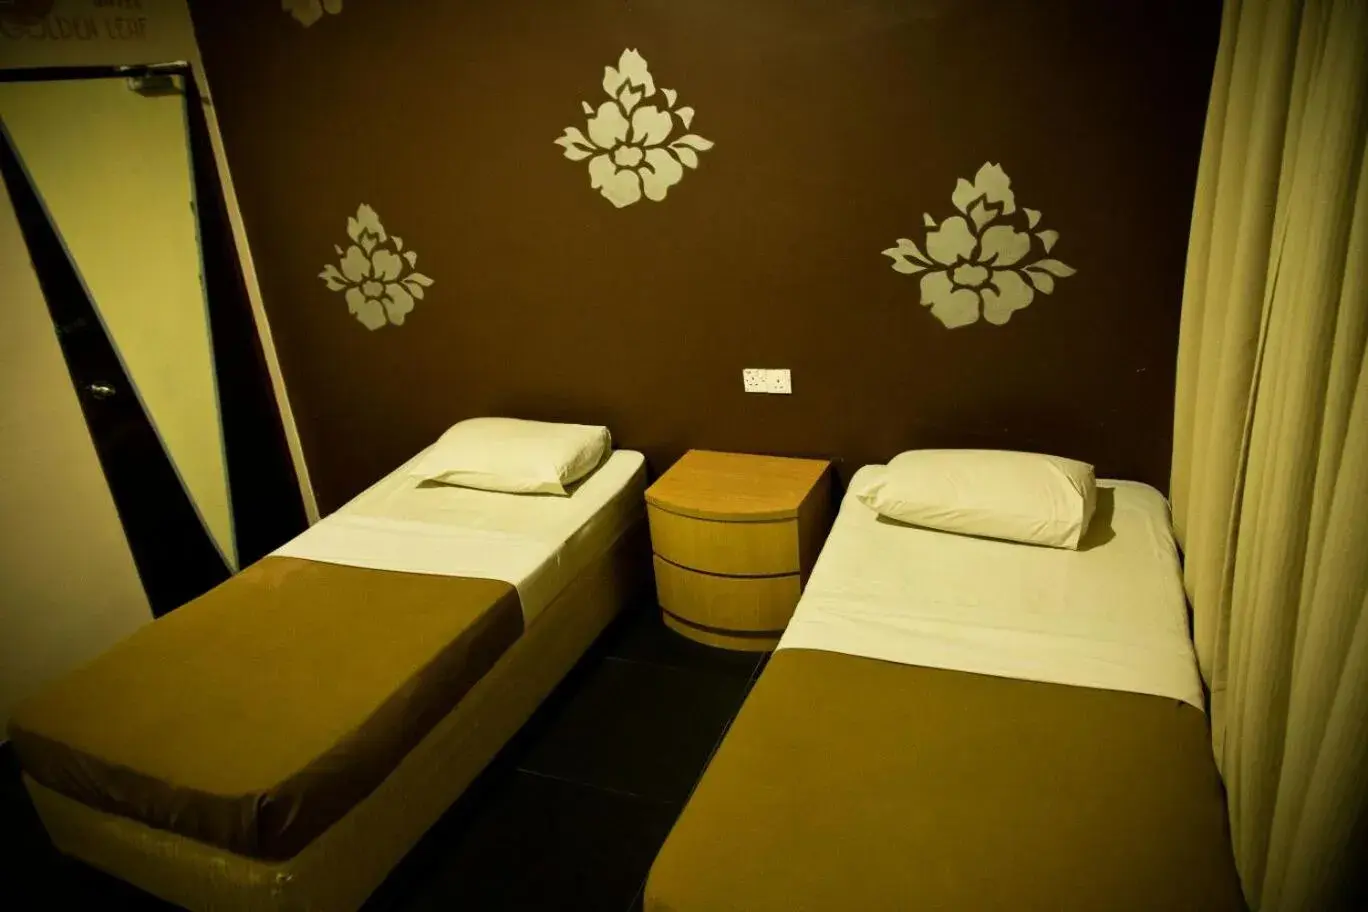 Bed in Golden Leaf Hotel Danga Bay 5 minutes Hospital Hsa,Zoo,Angsana Mall,20 minutes Utm, Legoland